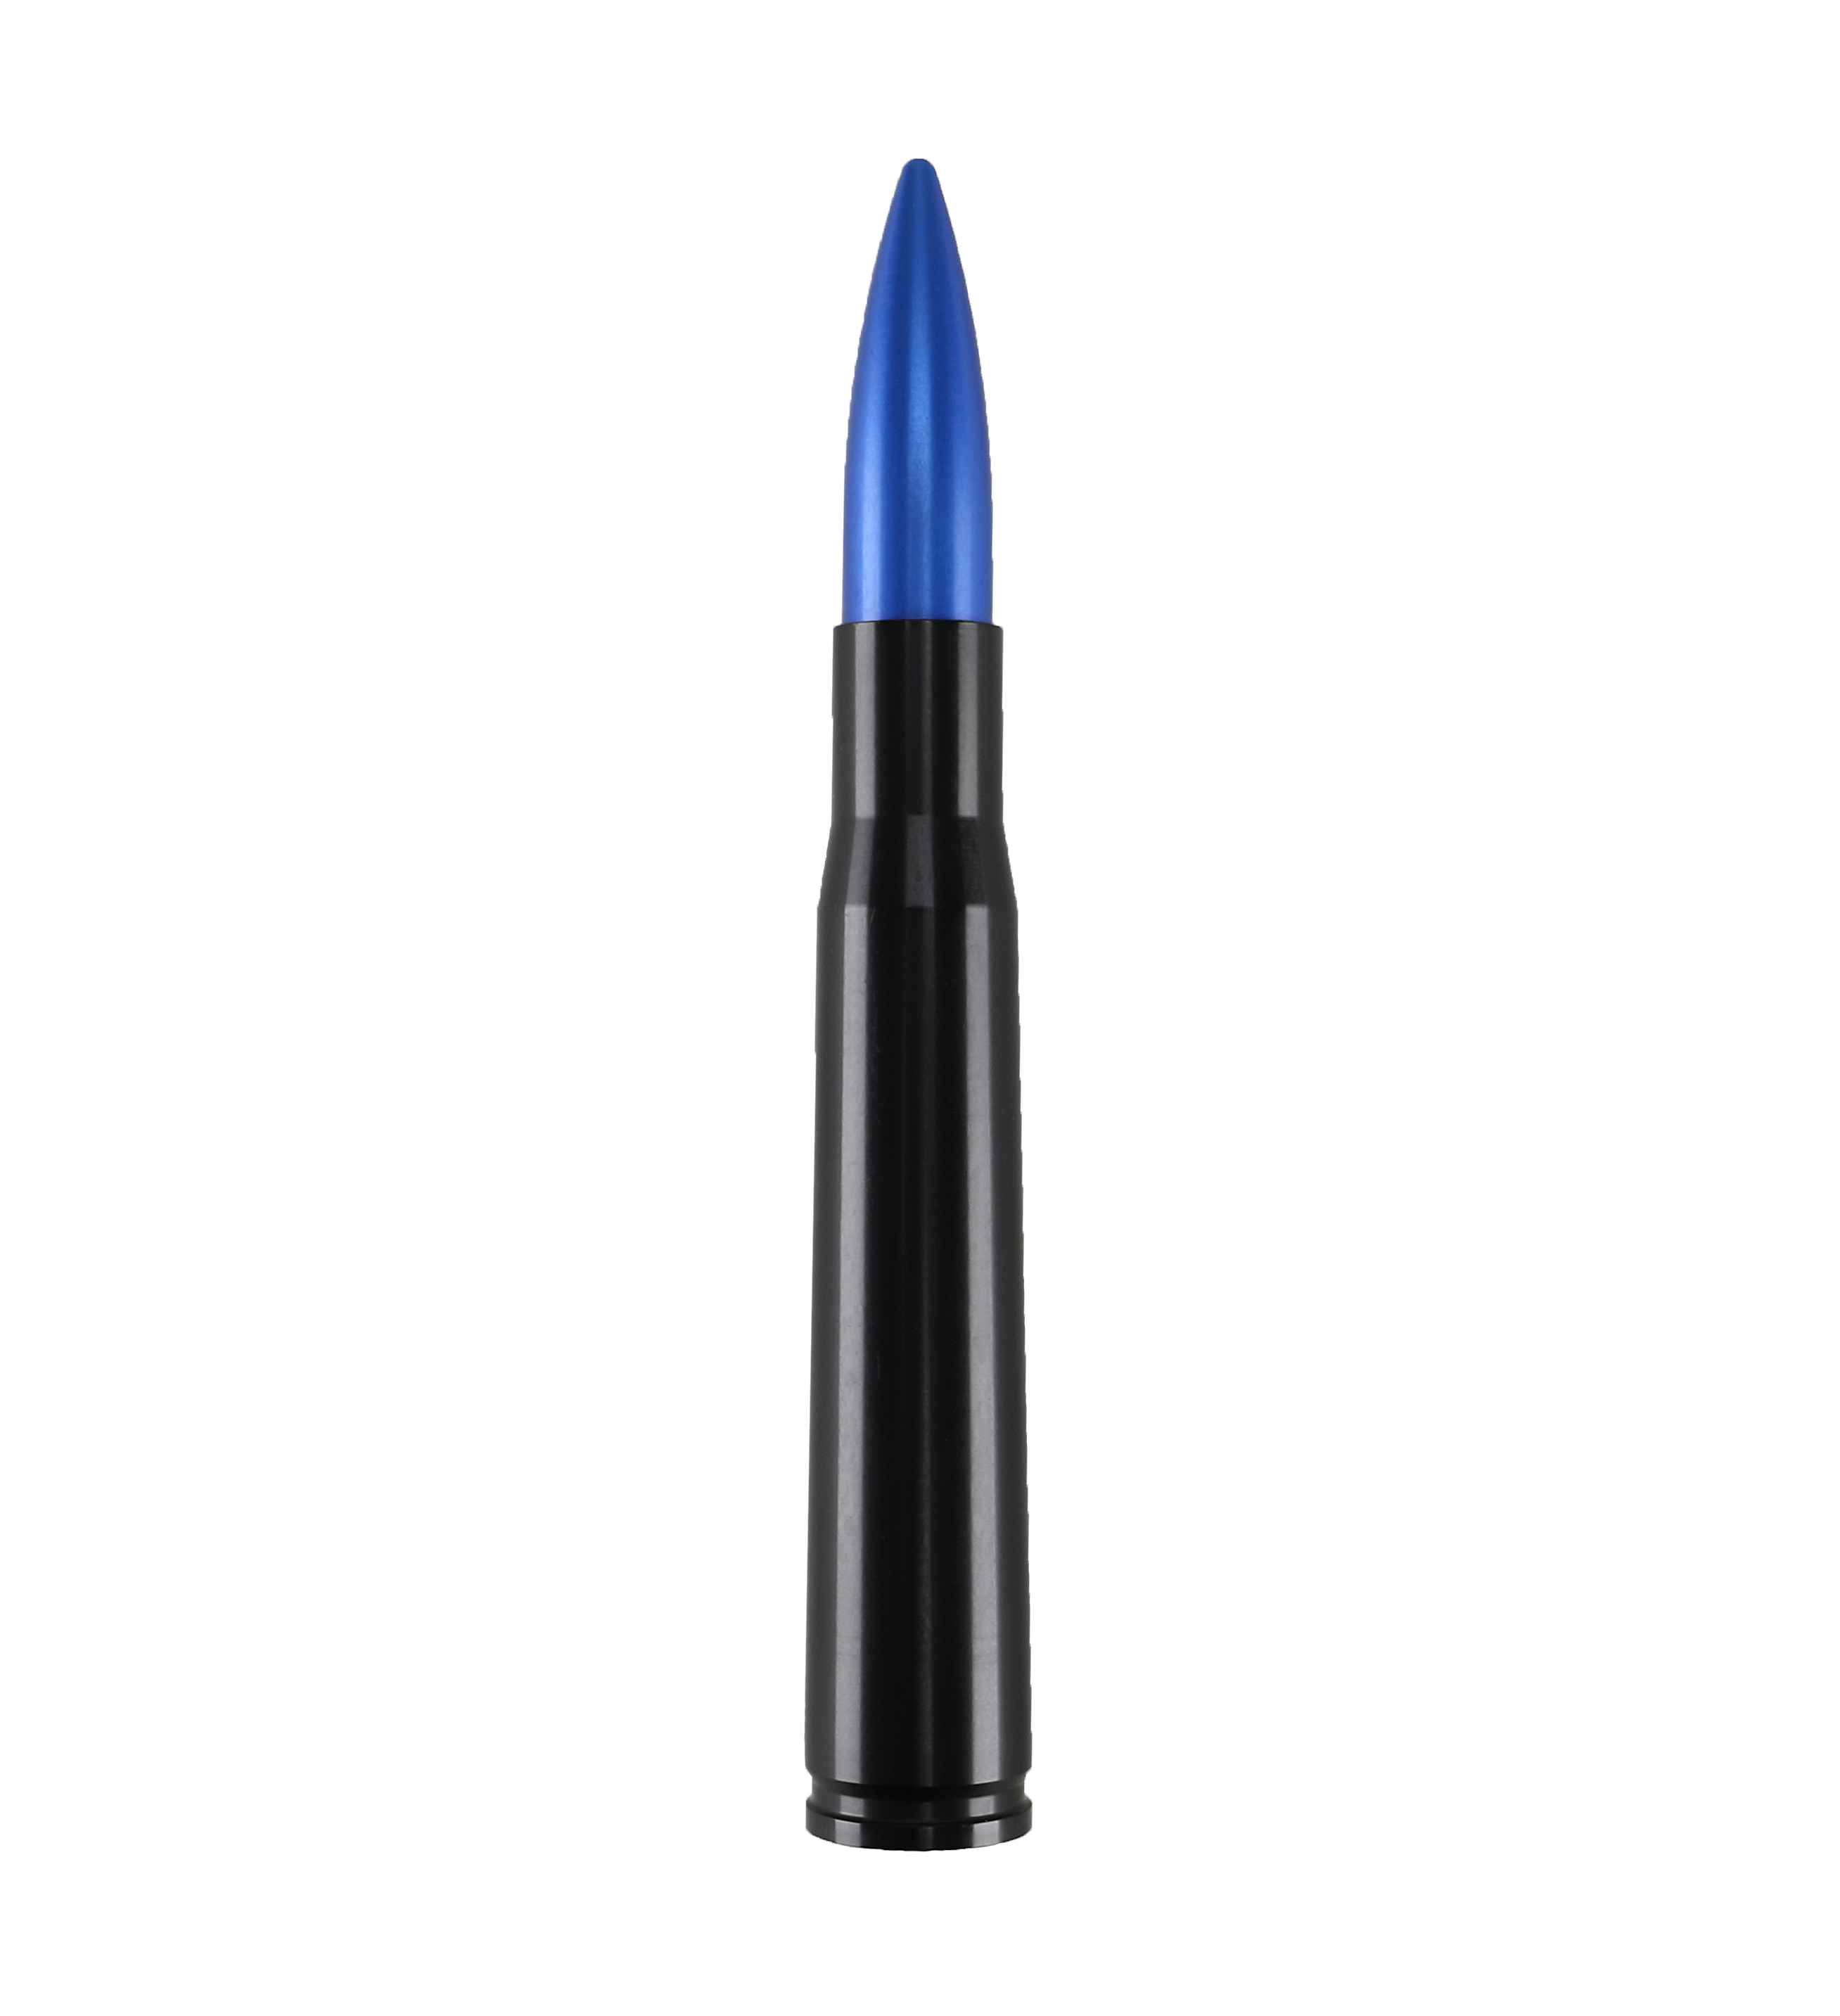 Votex - Made in USA - BLUE 50 Caliber Bullet Aluminum Antenna - Part Number A435-BLUE-HAR